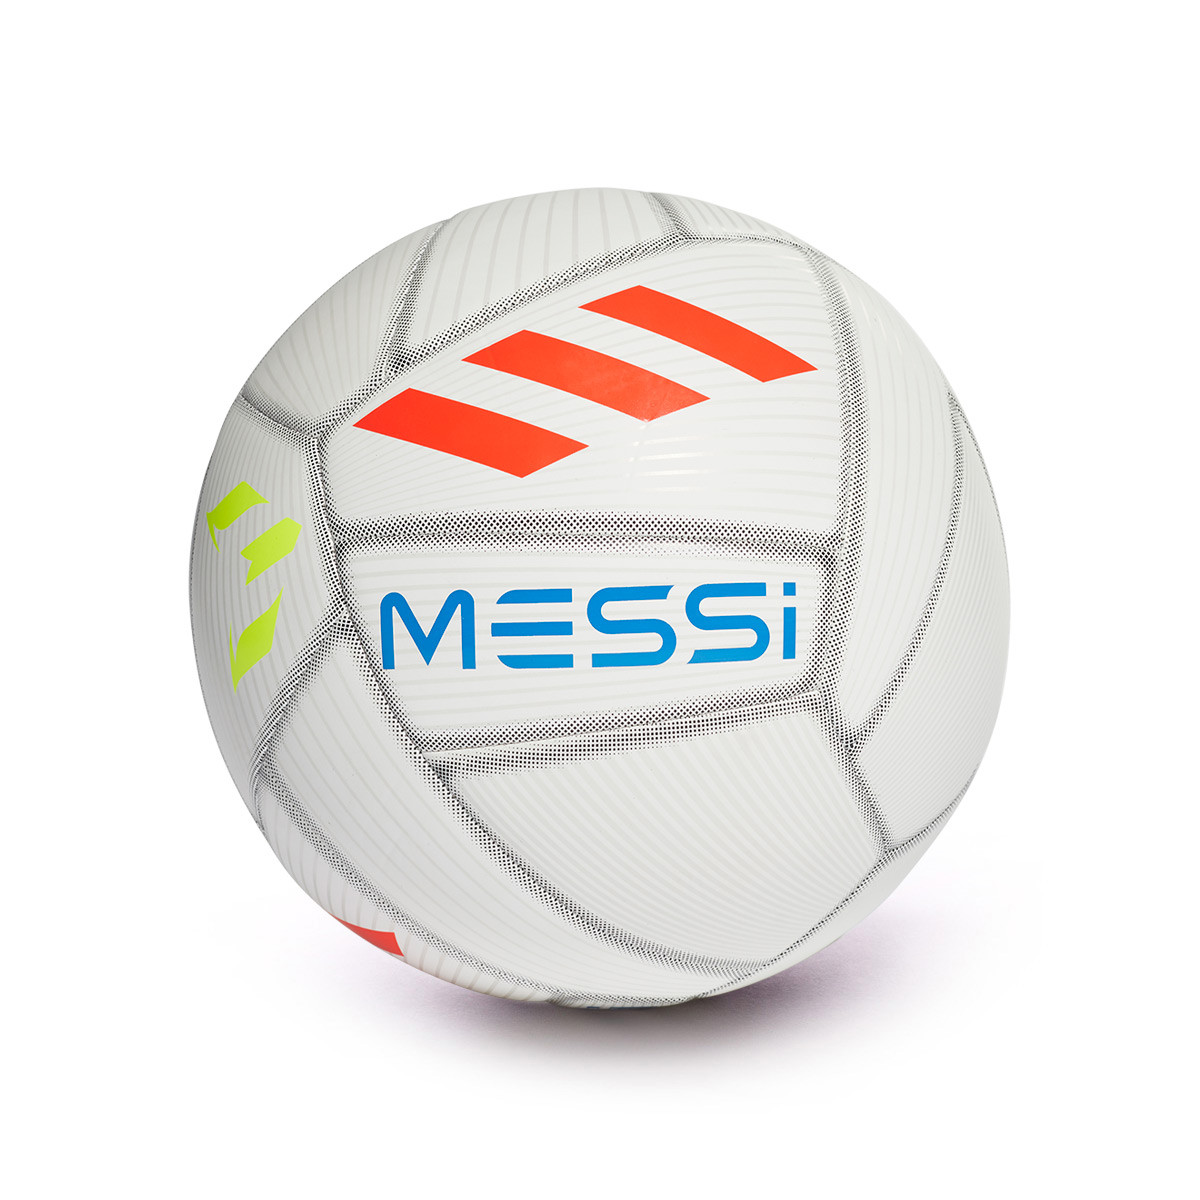 Balón adidas Messi Capitano 2018-2019 White-Crystal white-Football  blue-Solar red - Tienda de fútbol Fútbol Emotion